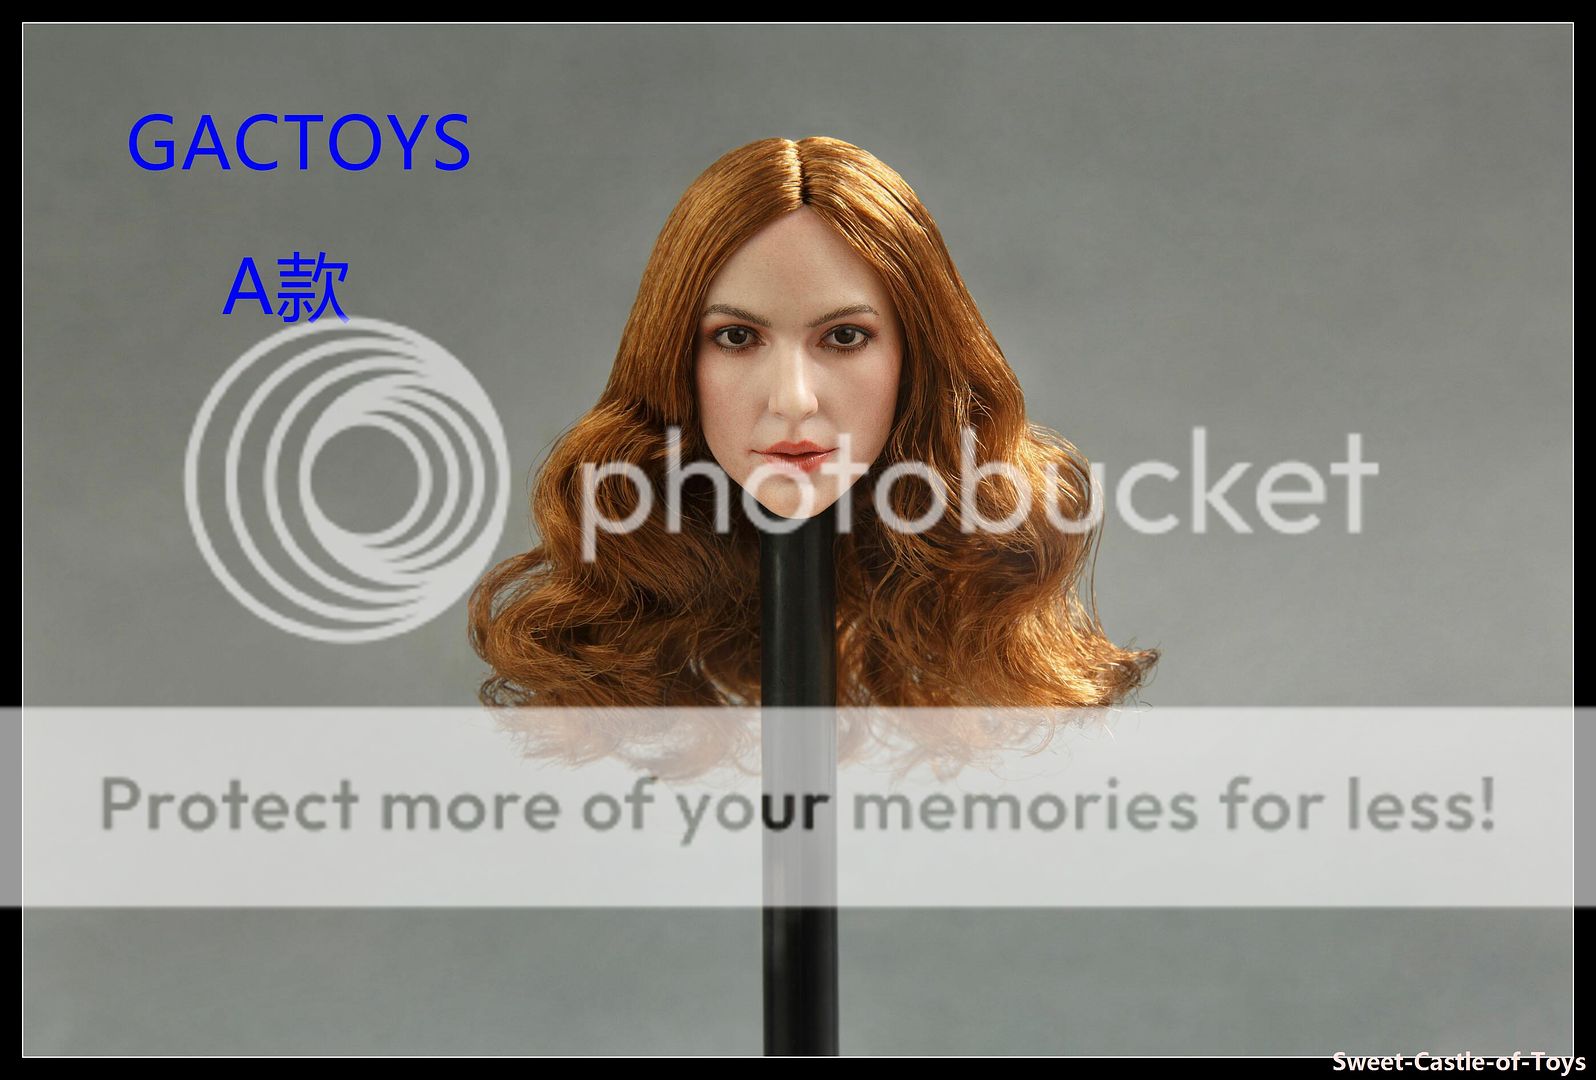 1//6 GACtoys Accessory Beauty Female Long Brown Hair Head Sculpt GC025 B Ver.